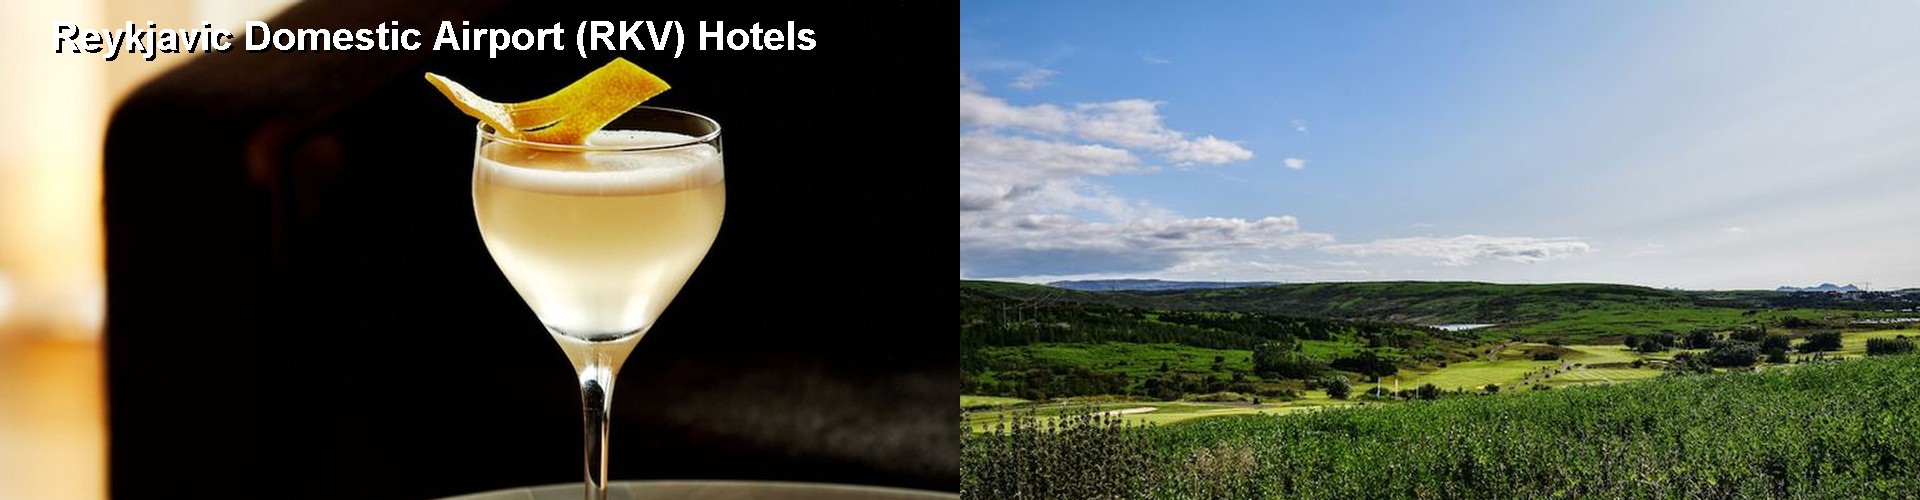 5 Best Hotels near Reykjavic Domestic Airport (RKV)